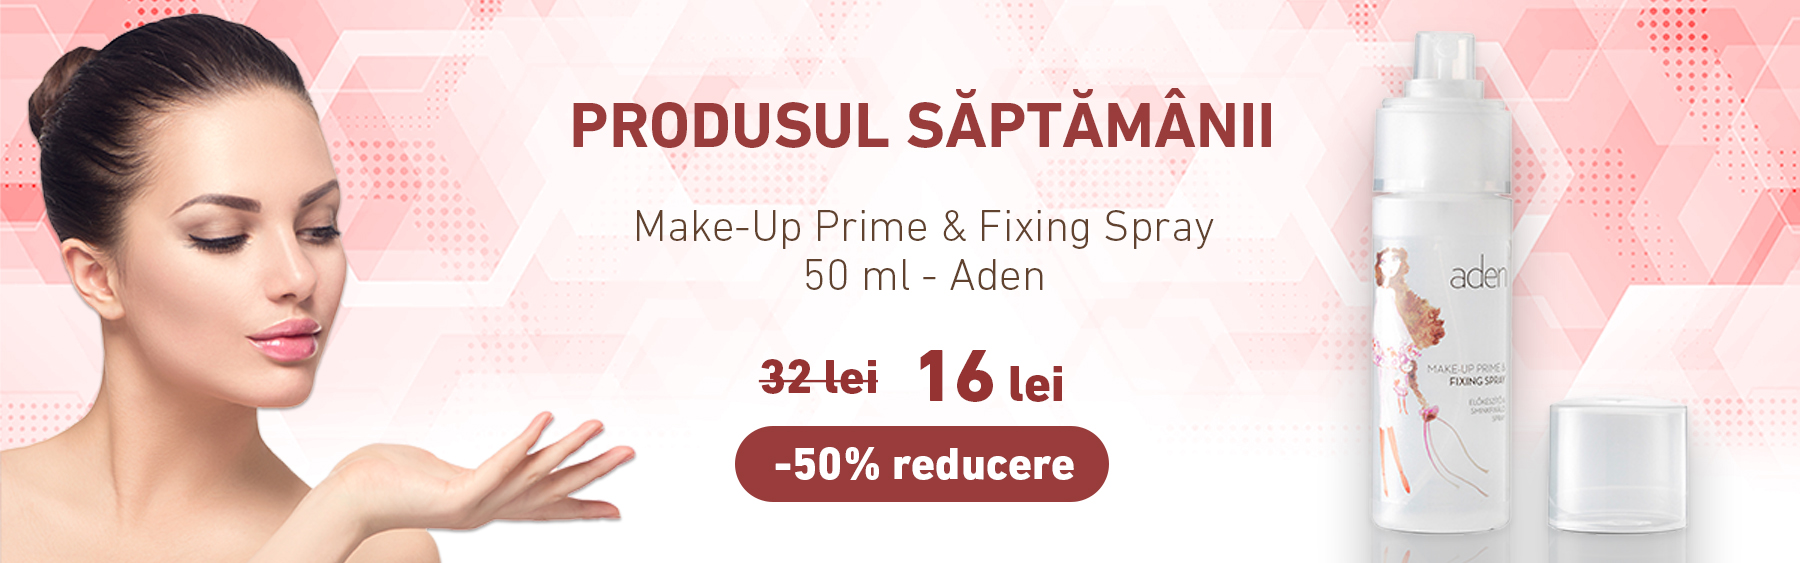 Make-Up Prime & Fixing Spray - 50 ml - Aden cu -50% reducere